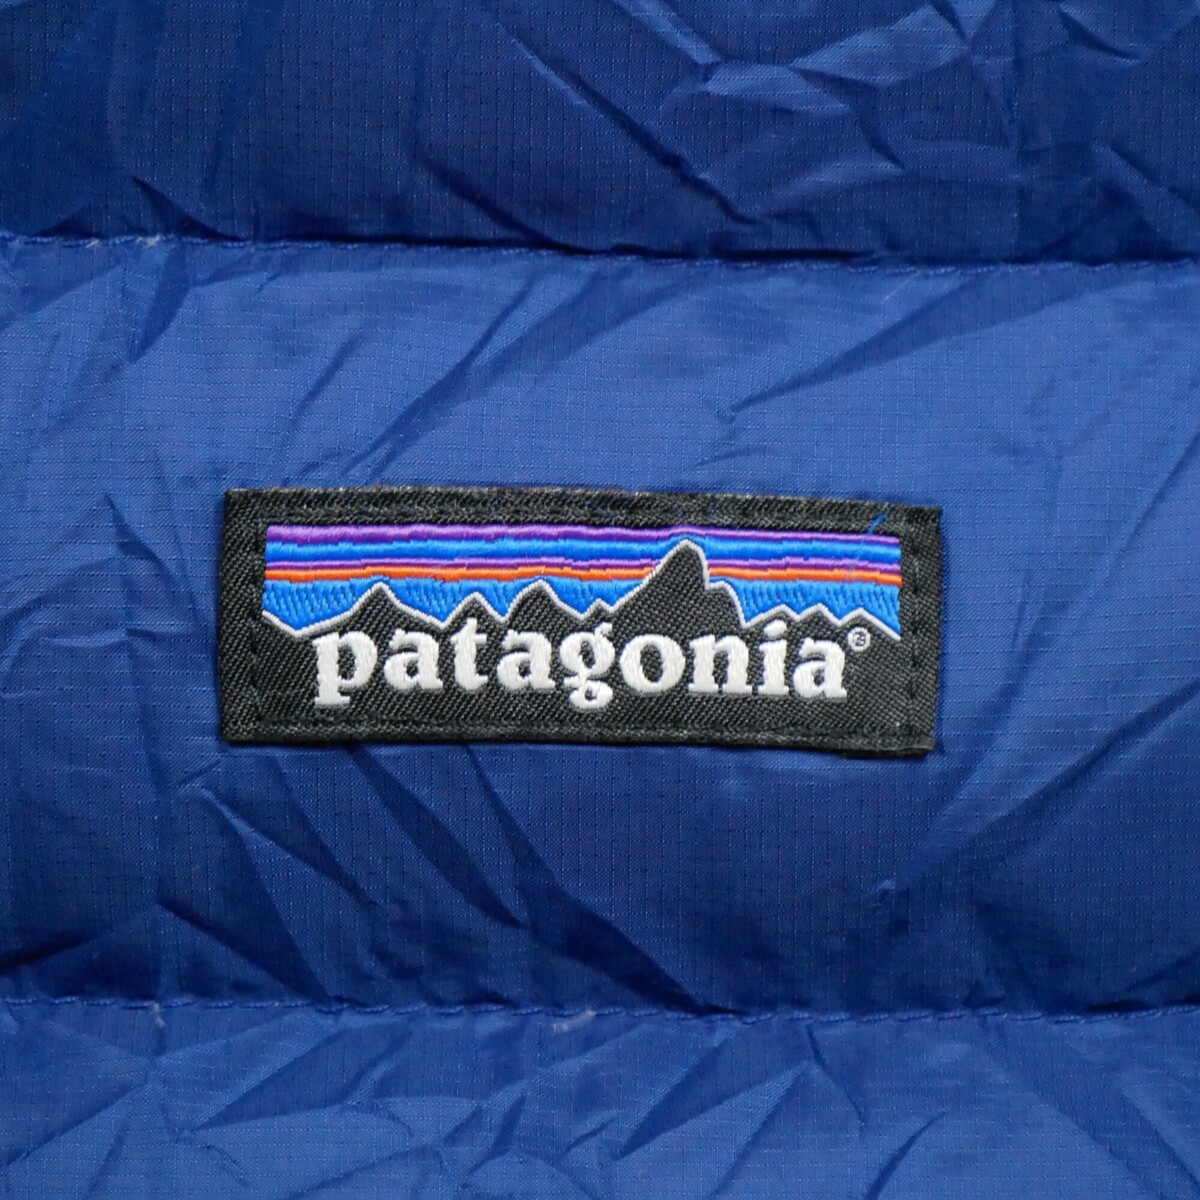 Patagonia Bleu Doudoune dnkZ0a1x